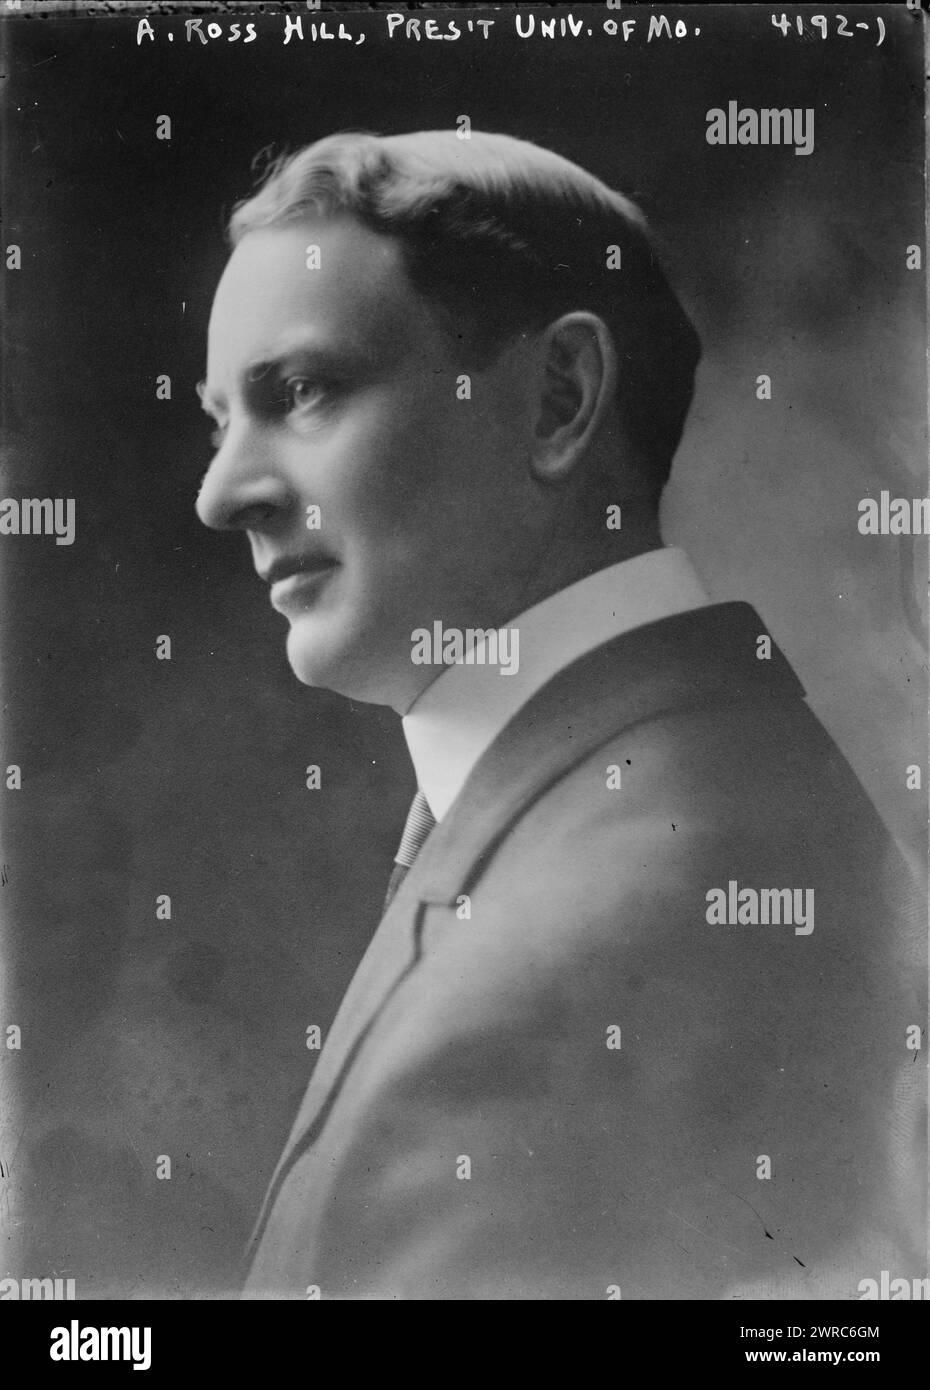 A. Ross Hill, Pres't of Univ. of Mo., Foto zeigt den Pädagogen Albert Ross Hill (1868–1943), Präsident der University of Missouri. 1915 und ca. 1920, Glasnegative, 1 negativ: Glas Stockfoto